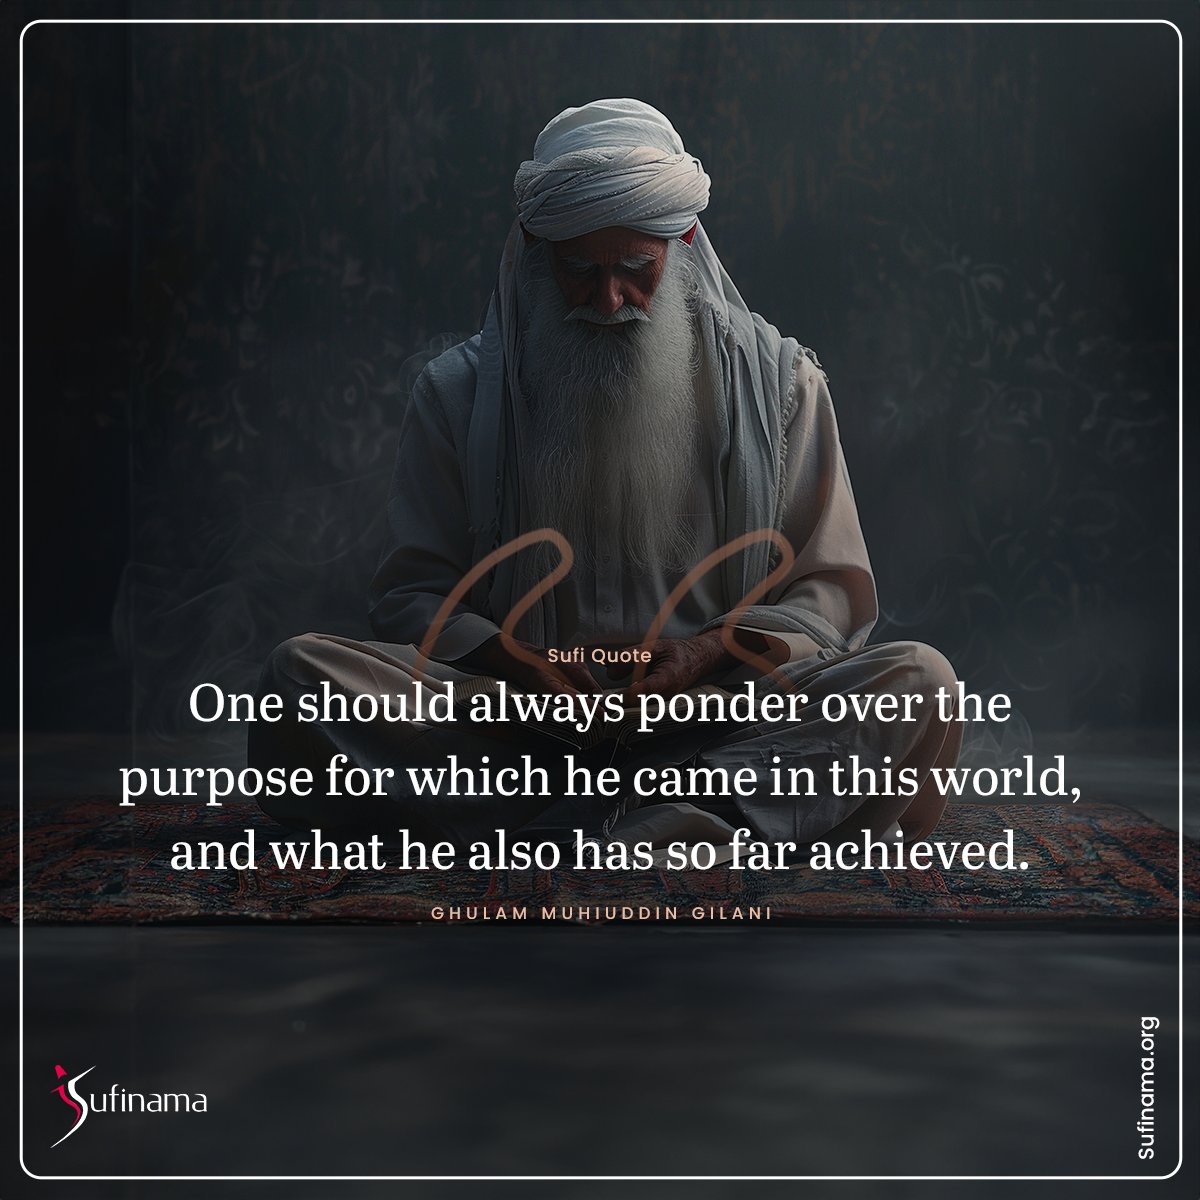 Sufi Quote/ Ghulam Muhiuddin Gilani #sufinama #sufism #sufi #sufiquotes